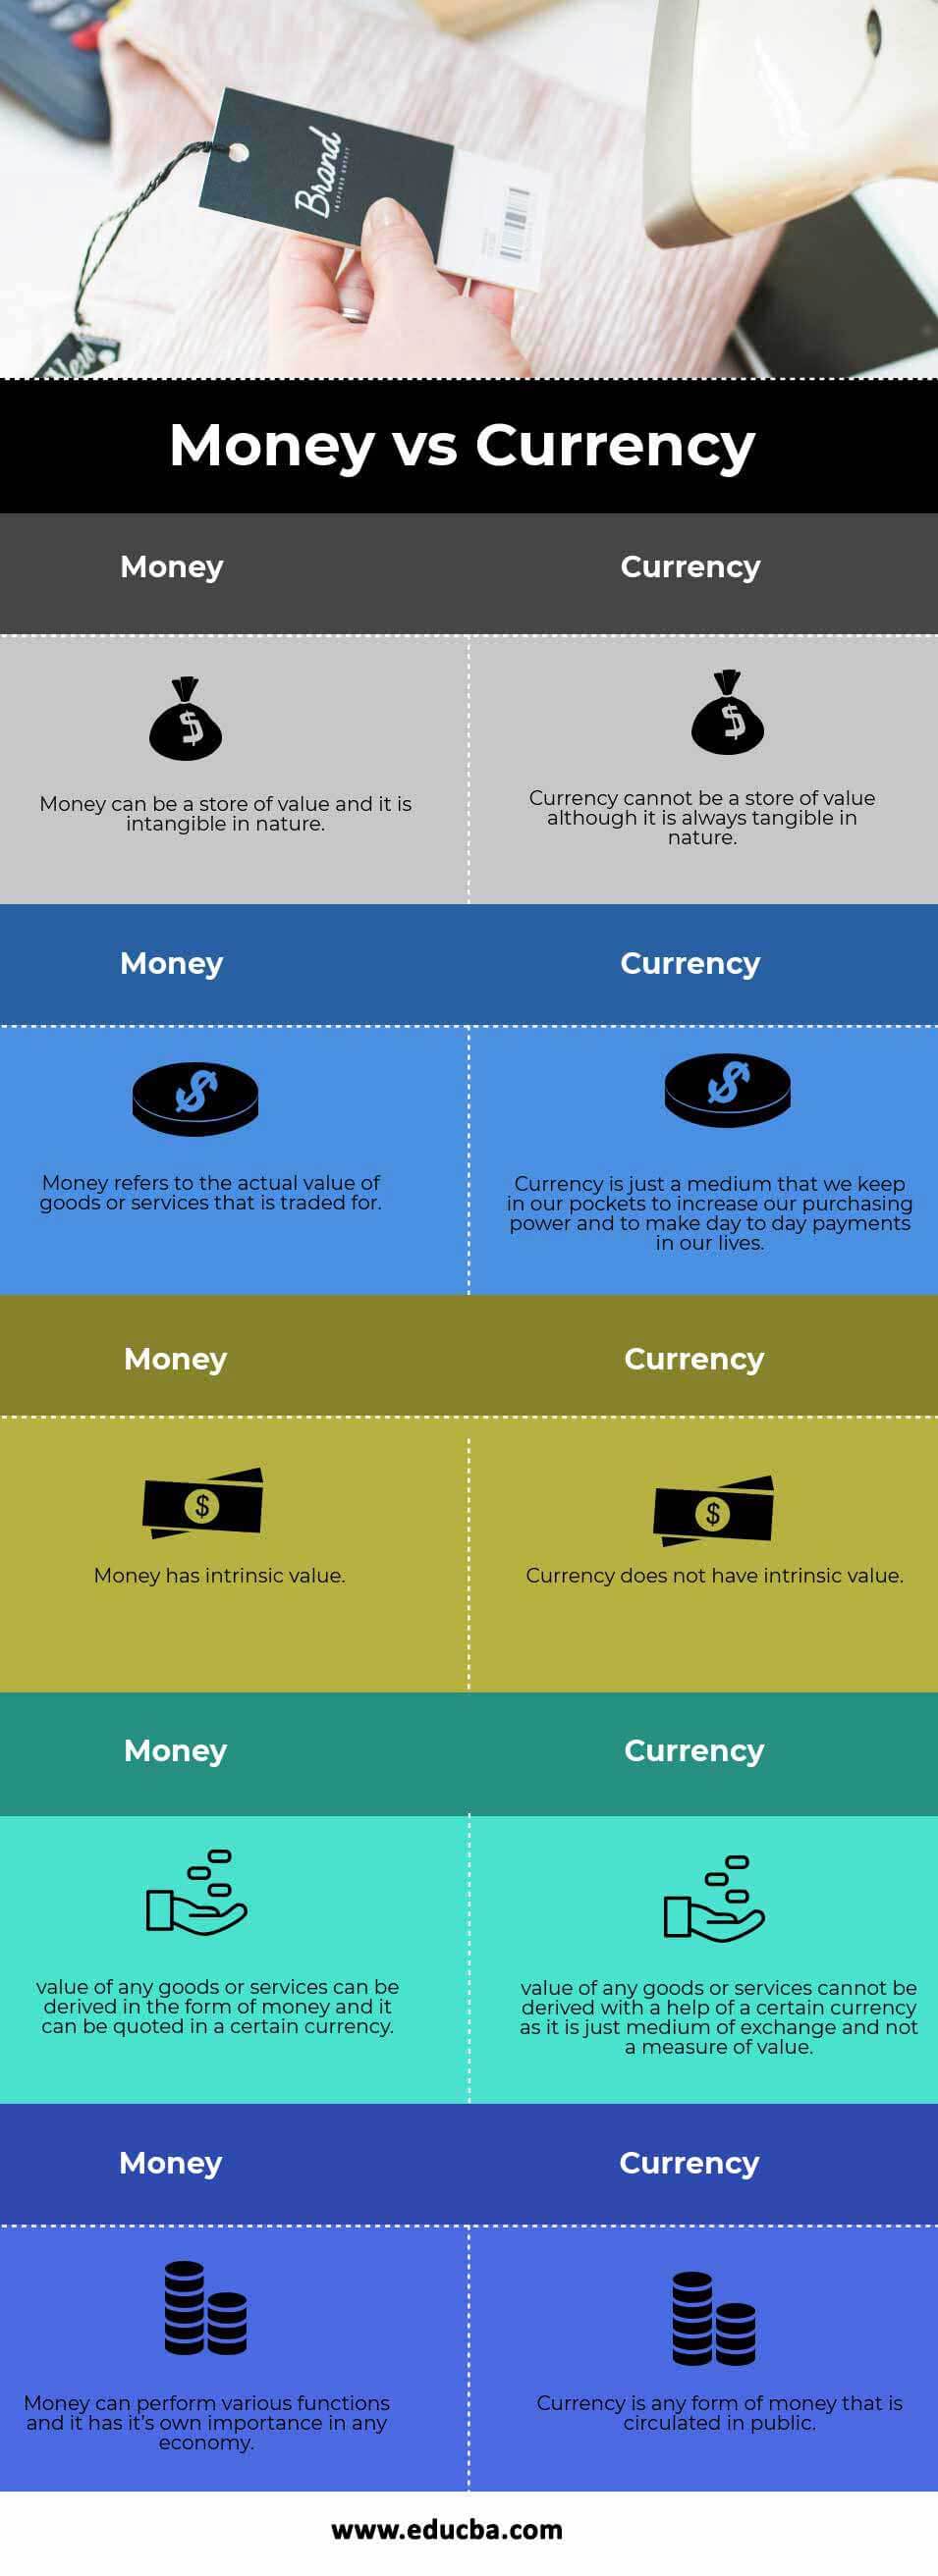 Money vs Currency info